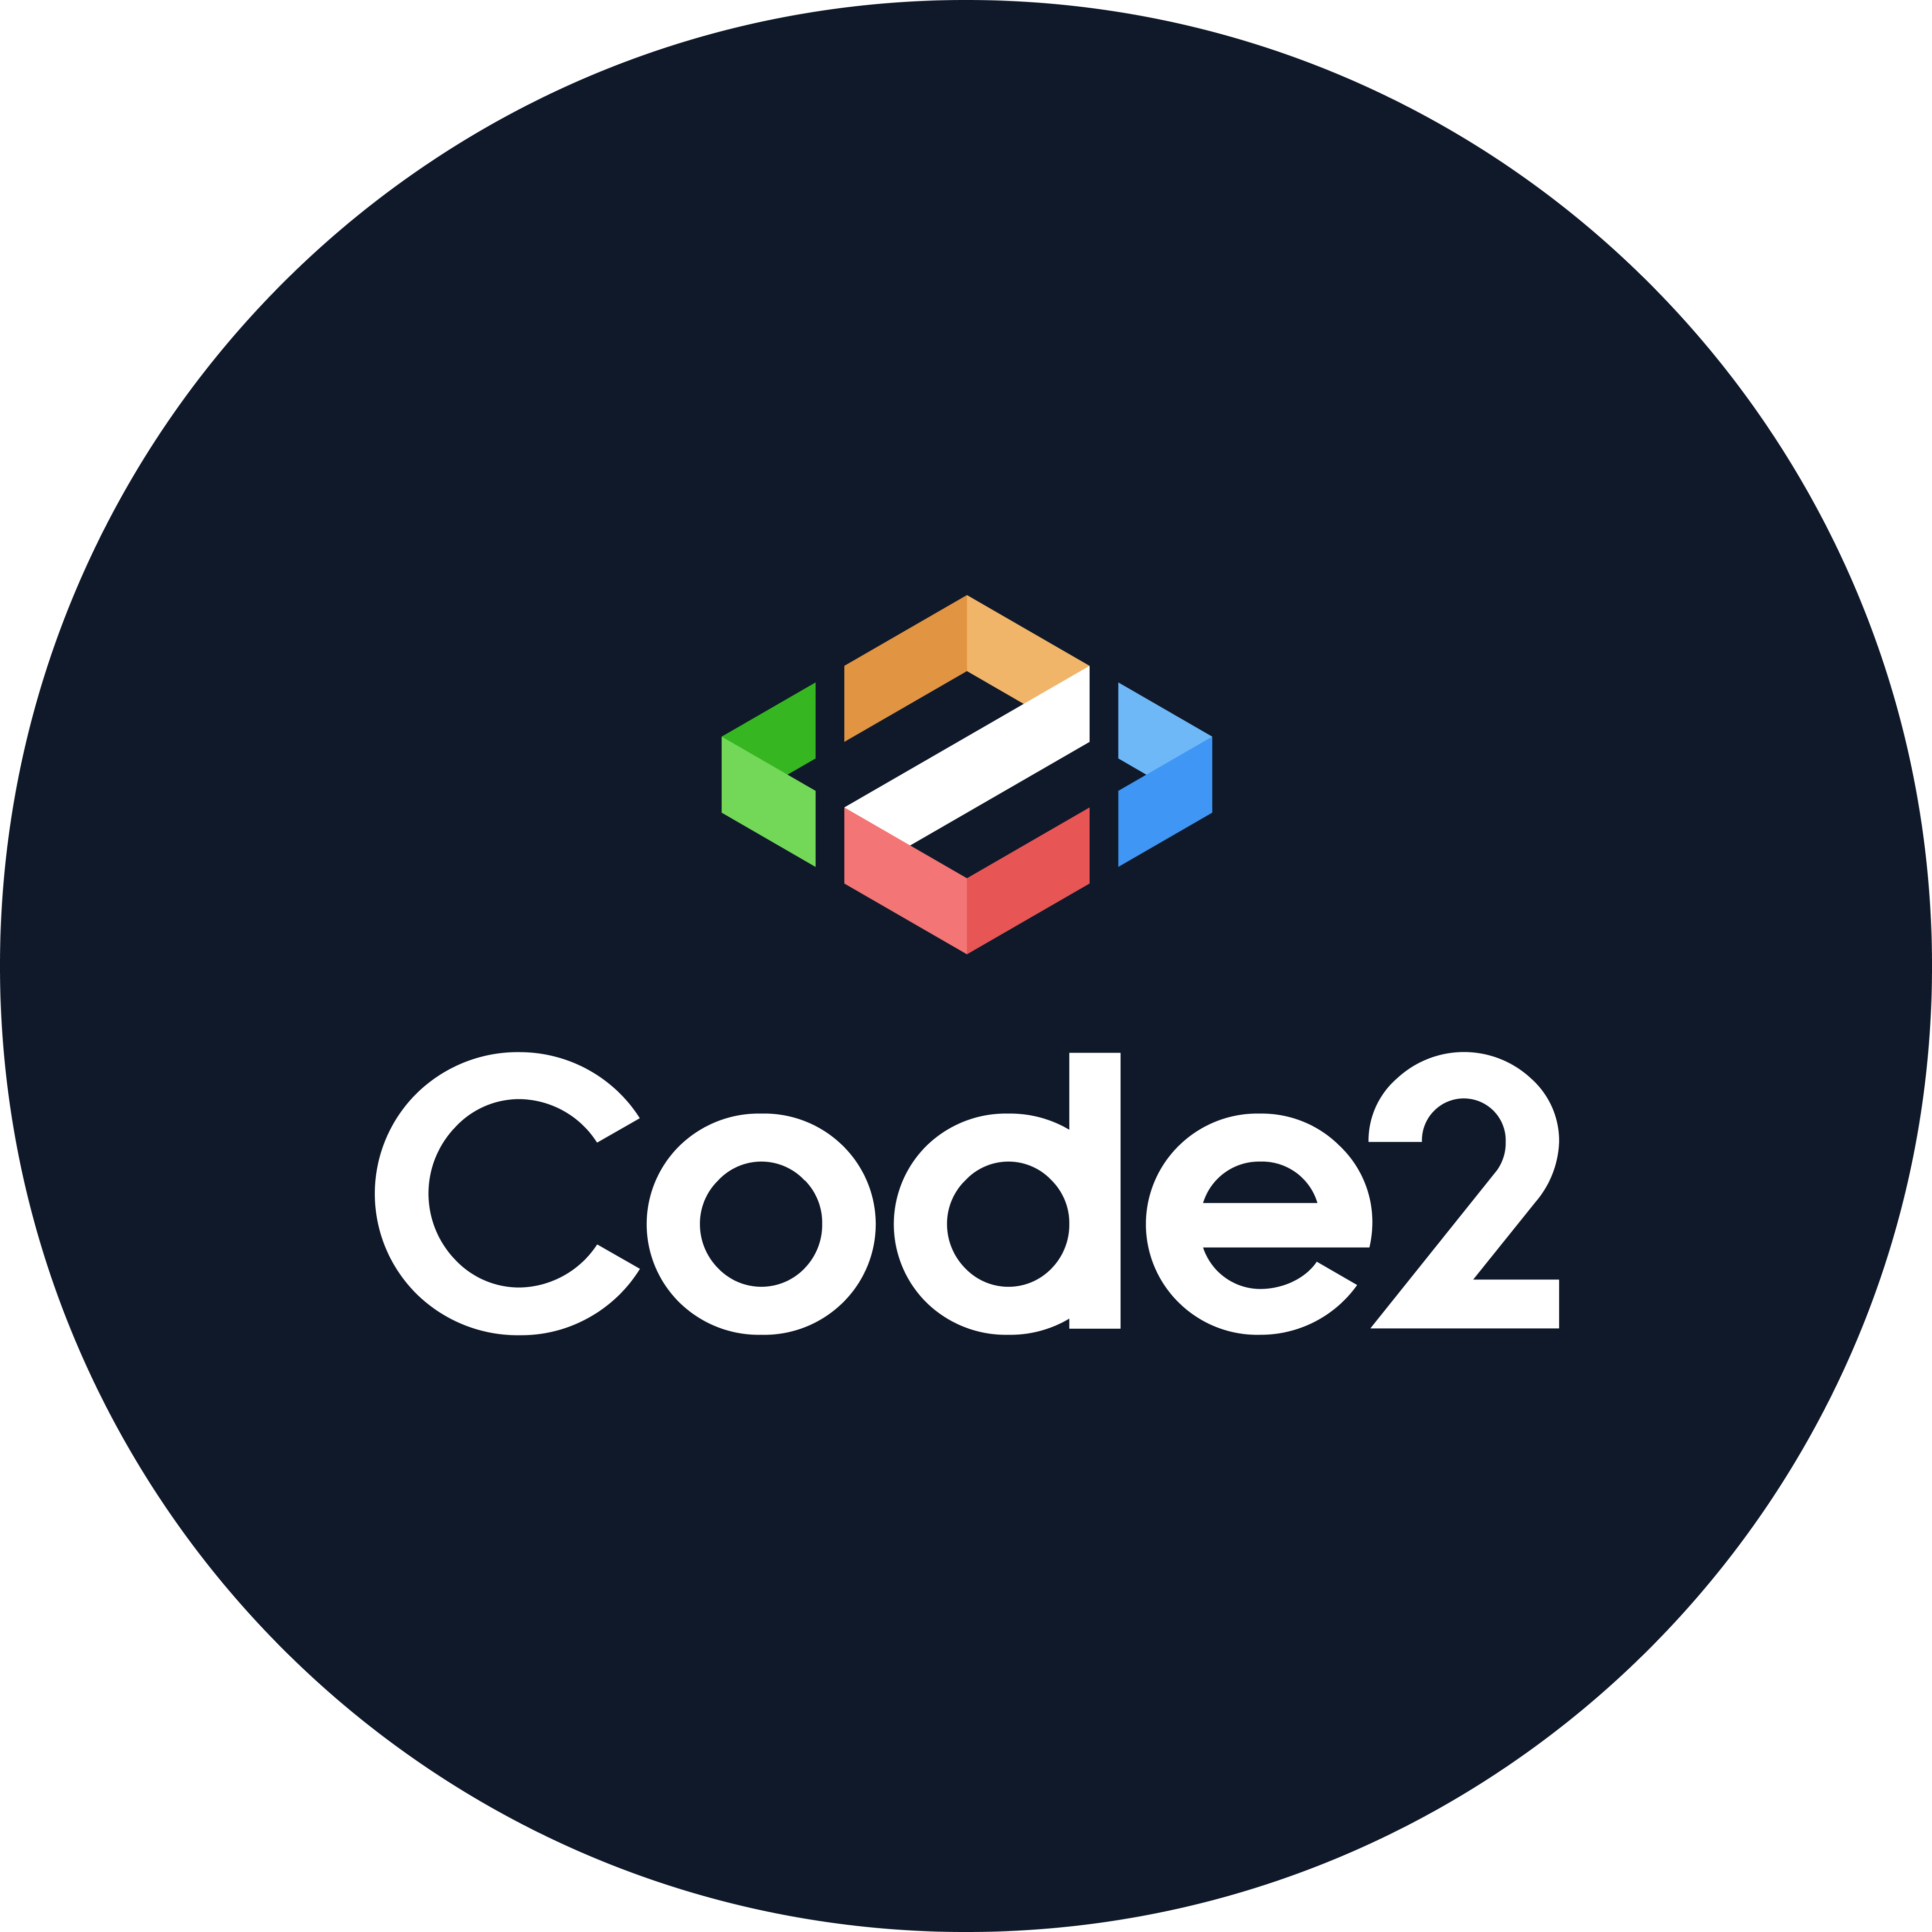 Code2